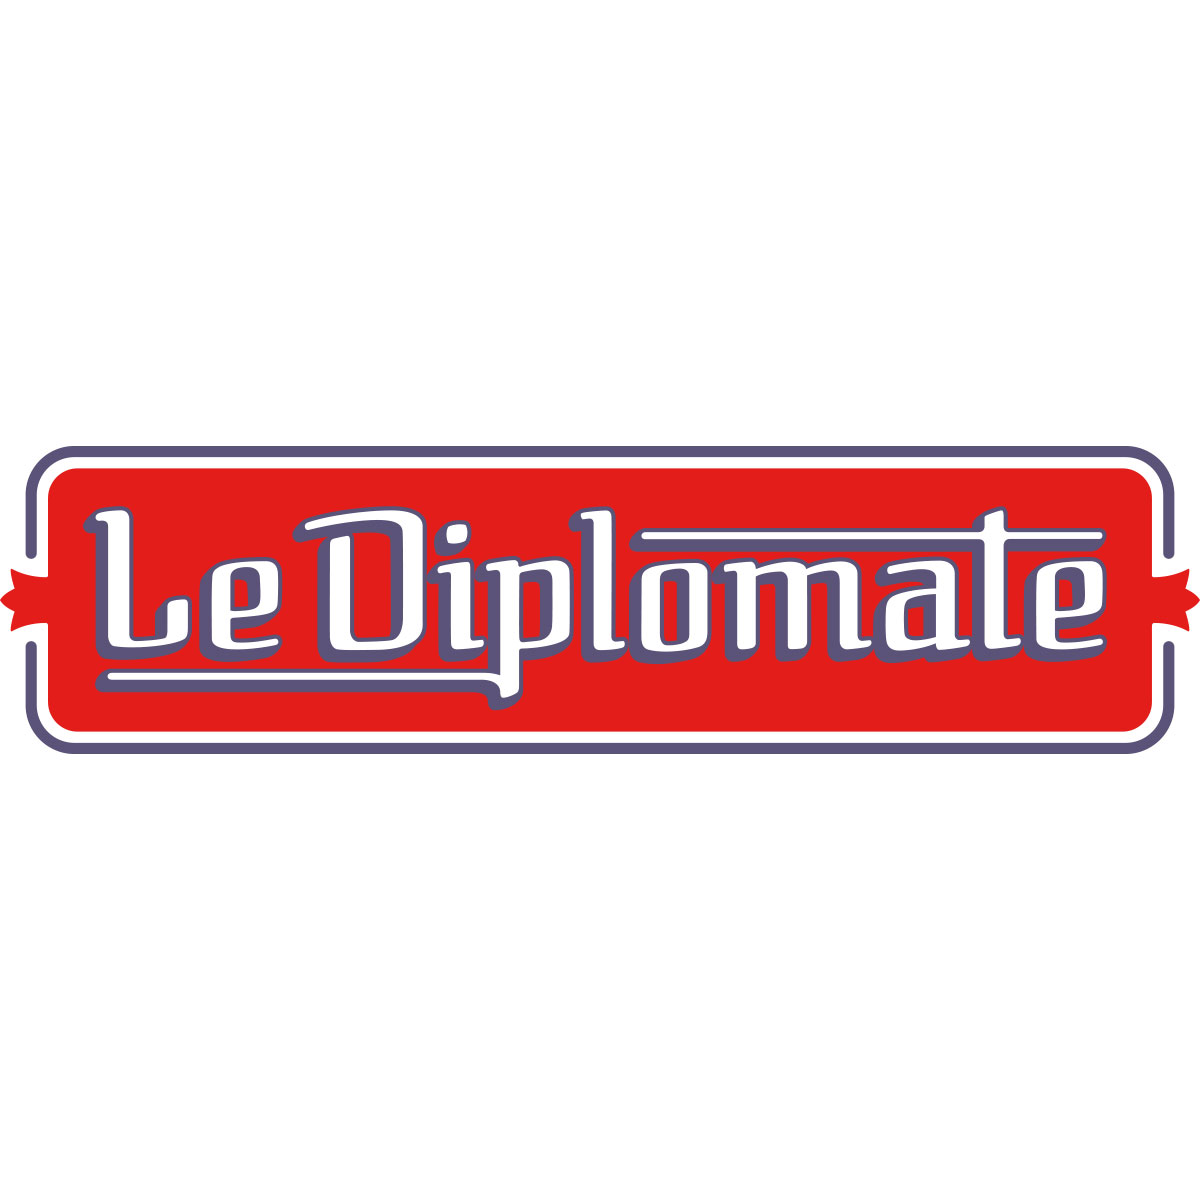 le-diplomate-logo.jpg